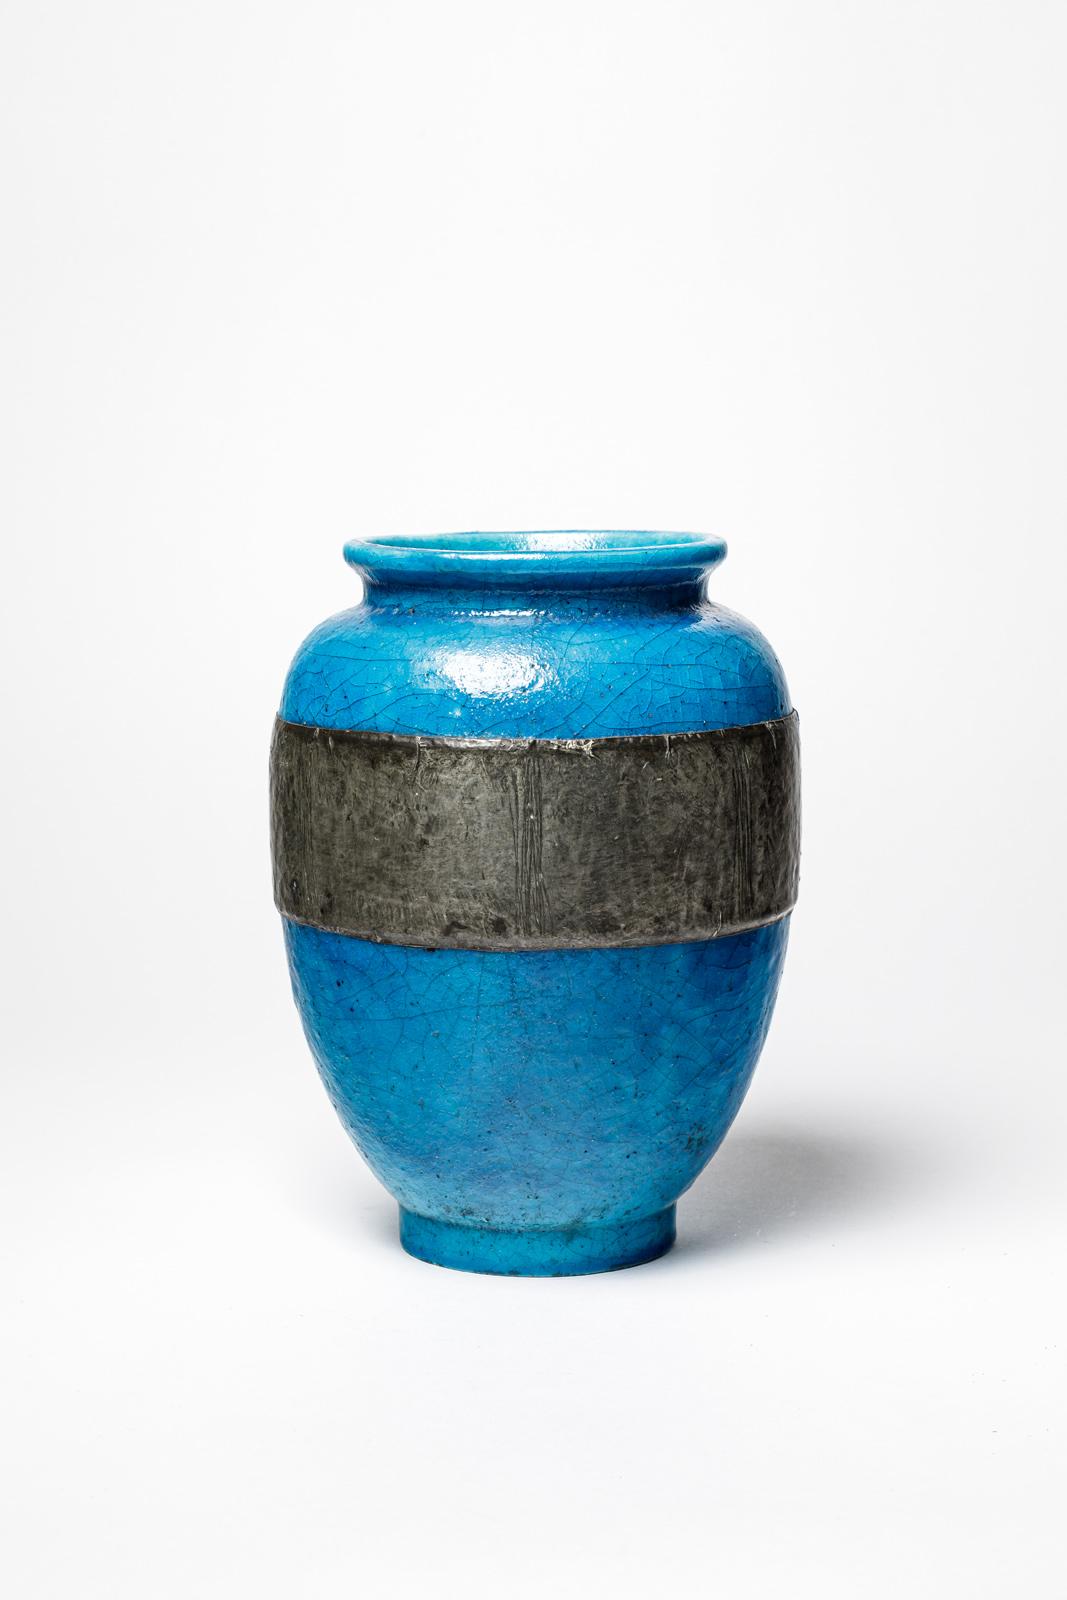 Art Deco Large 20th century art deco blue ceramic and metal vase by Lachenal 28 cm 1930 For Sale